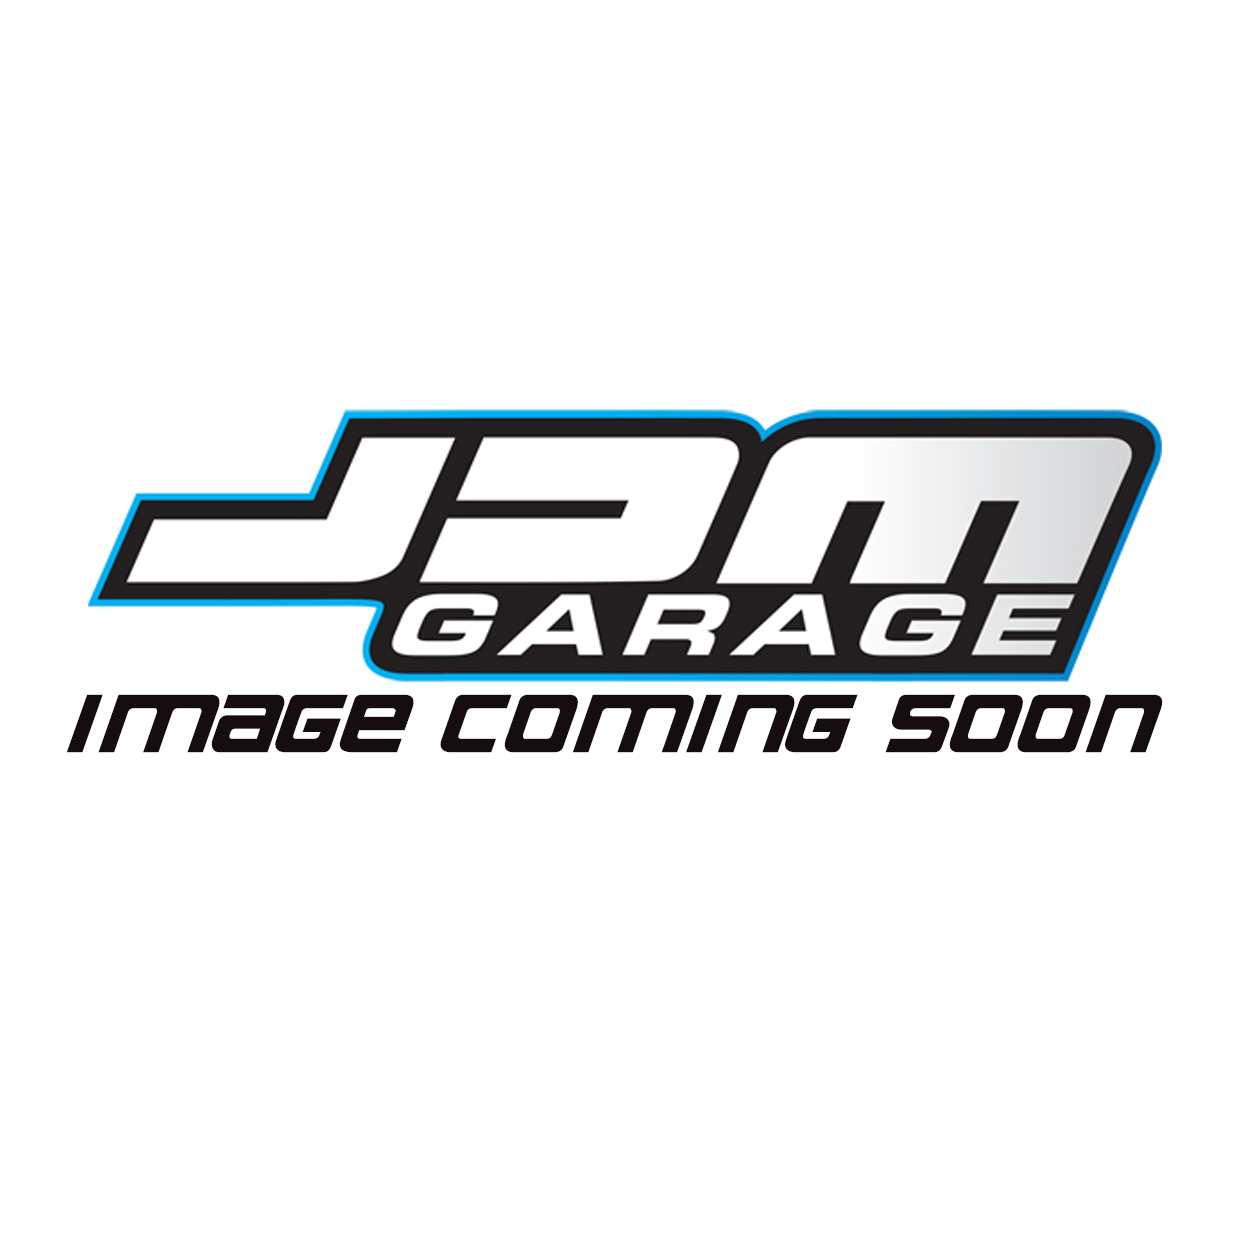 Nissan Skyline R33 Gts T Rear Light Jdm Garage Uk Nissan Specialists